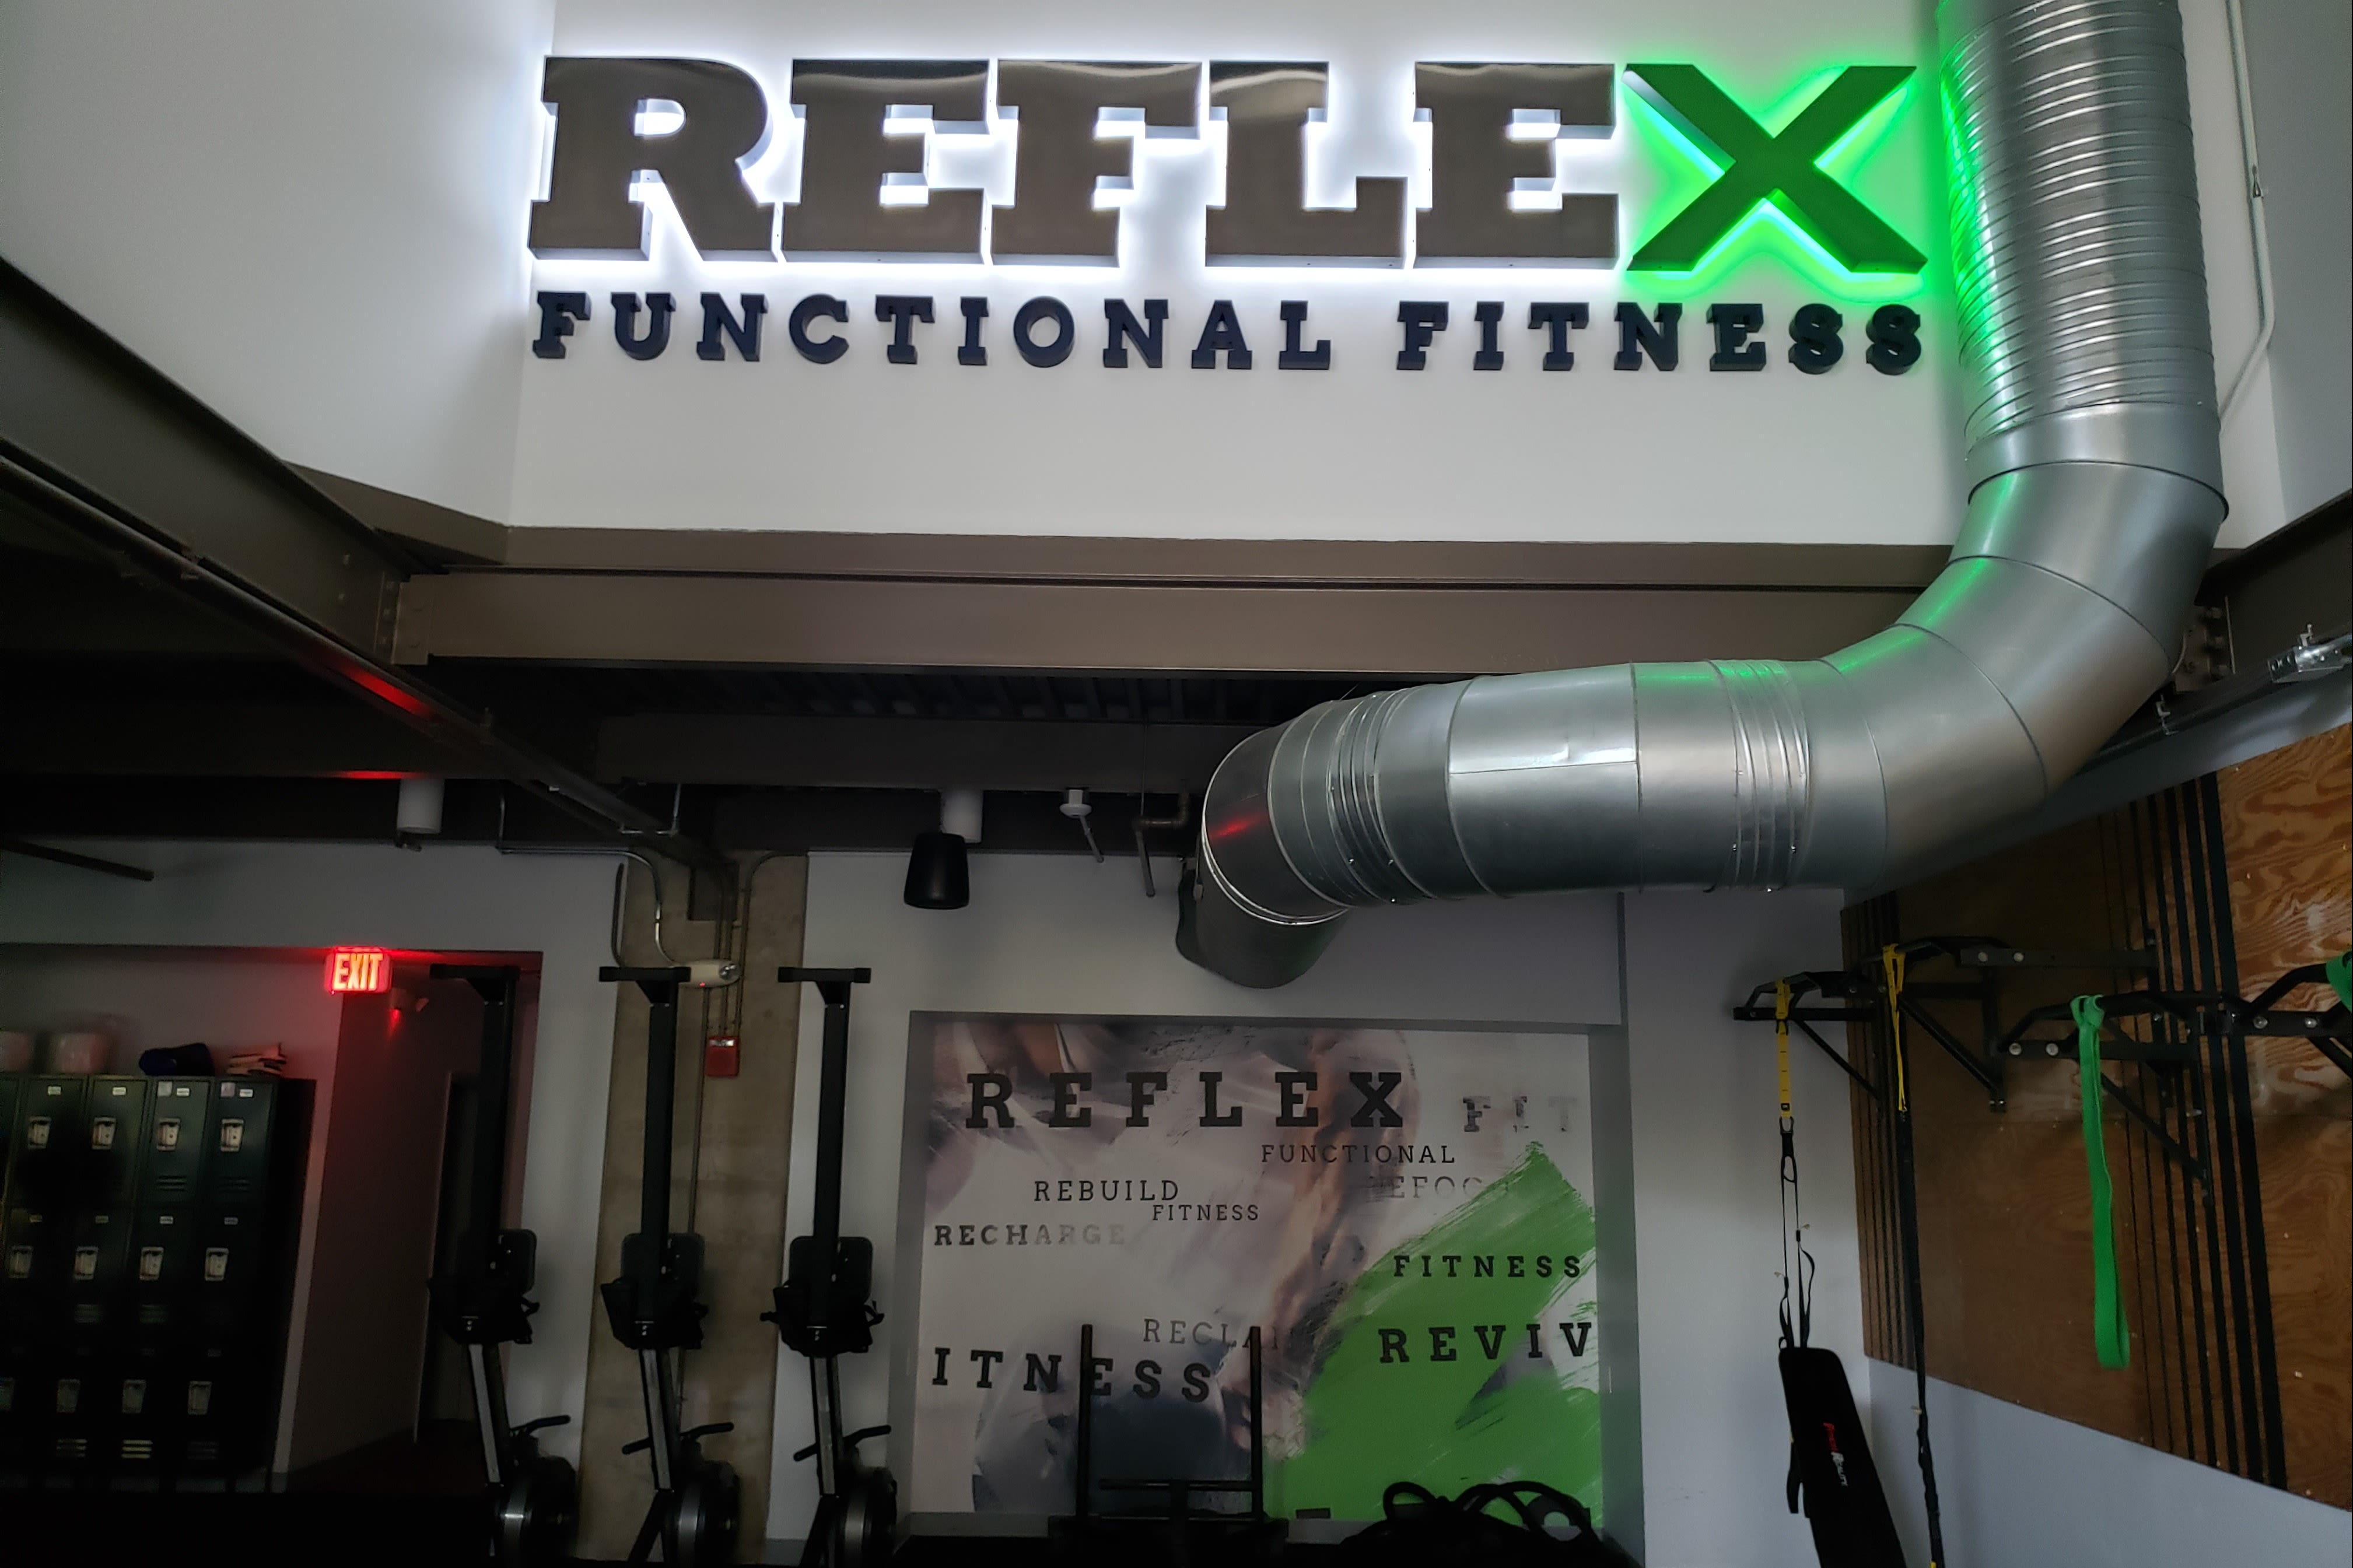 Reflex Fitness: Read Reviews and Book Classes on ClassPass